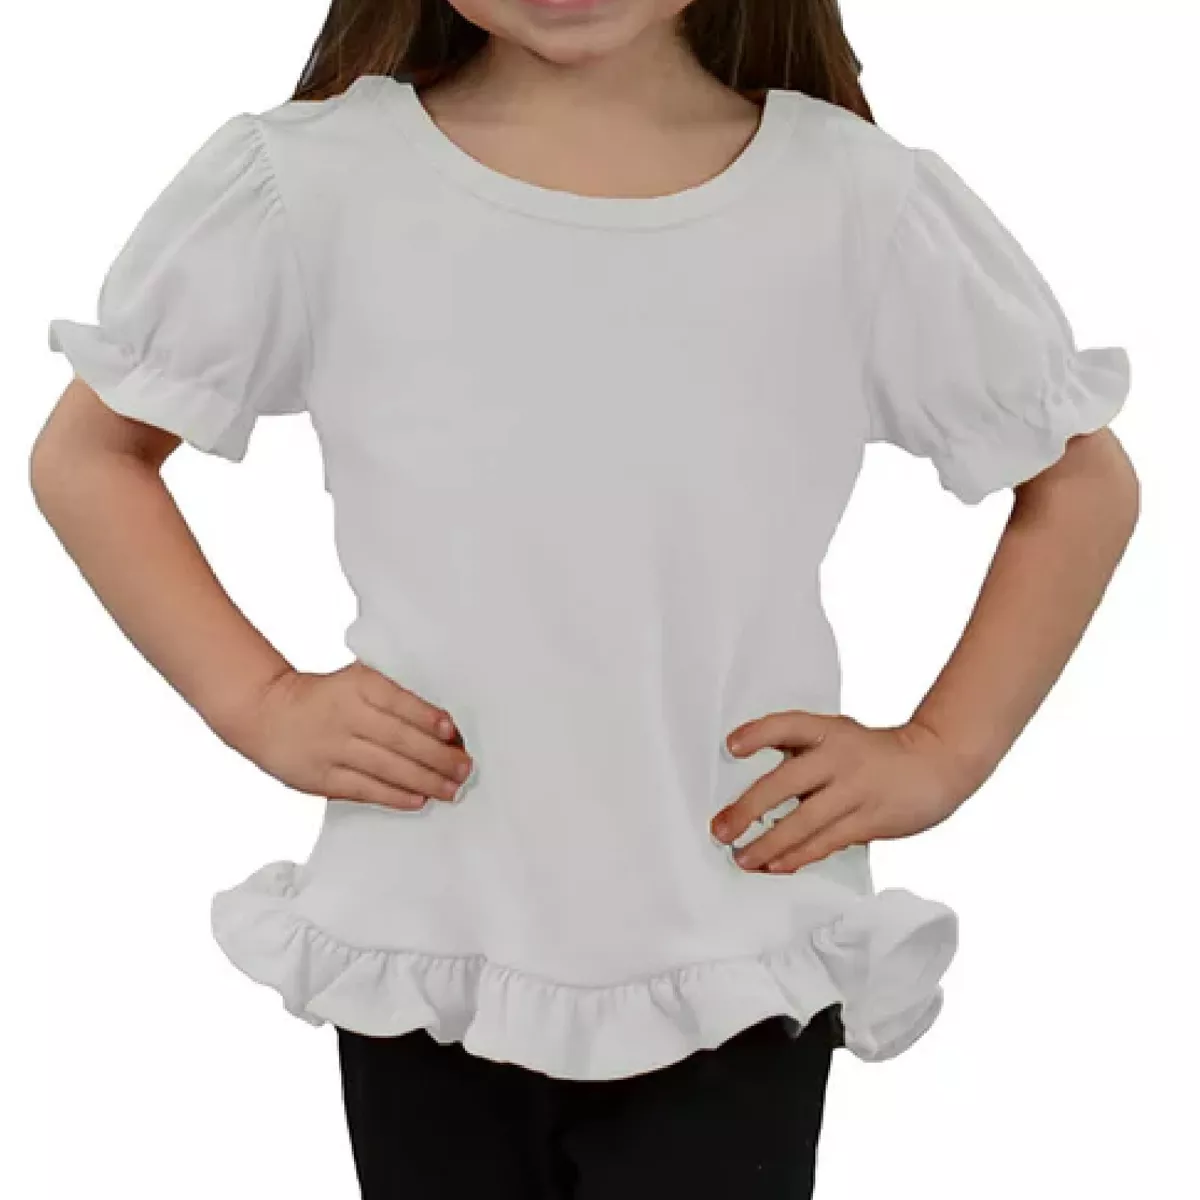 Embroidery 0r Vinyl Blanks Size 6-12m, 12-18m, 4T Girls White Shirts Lot  Monag